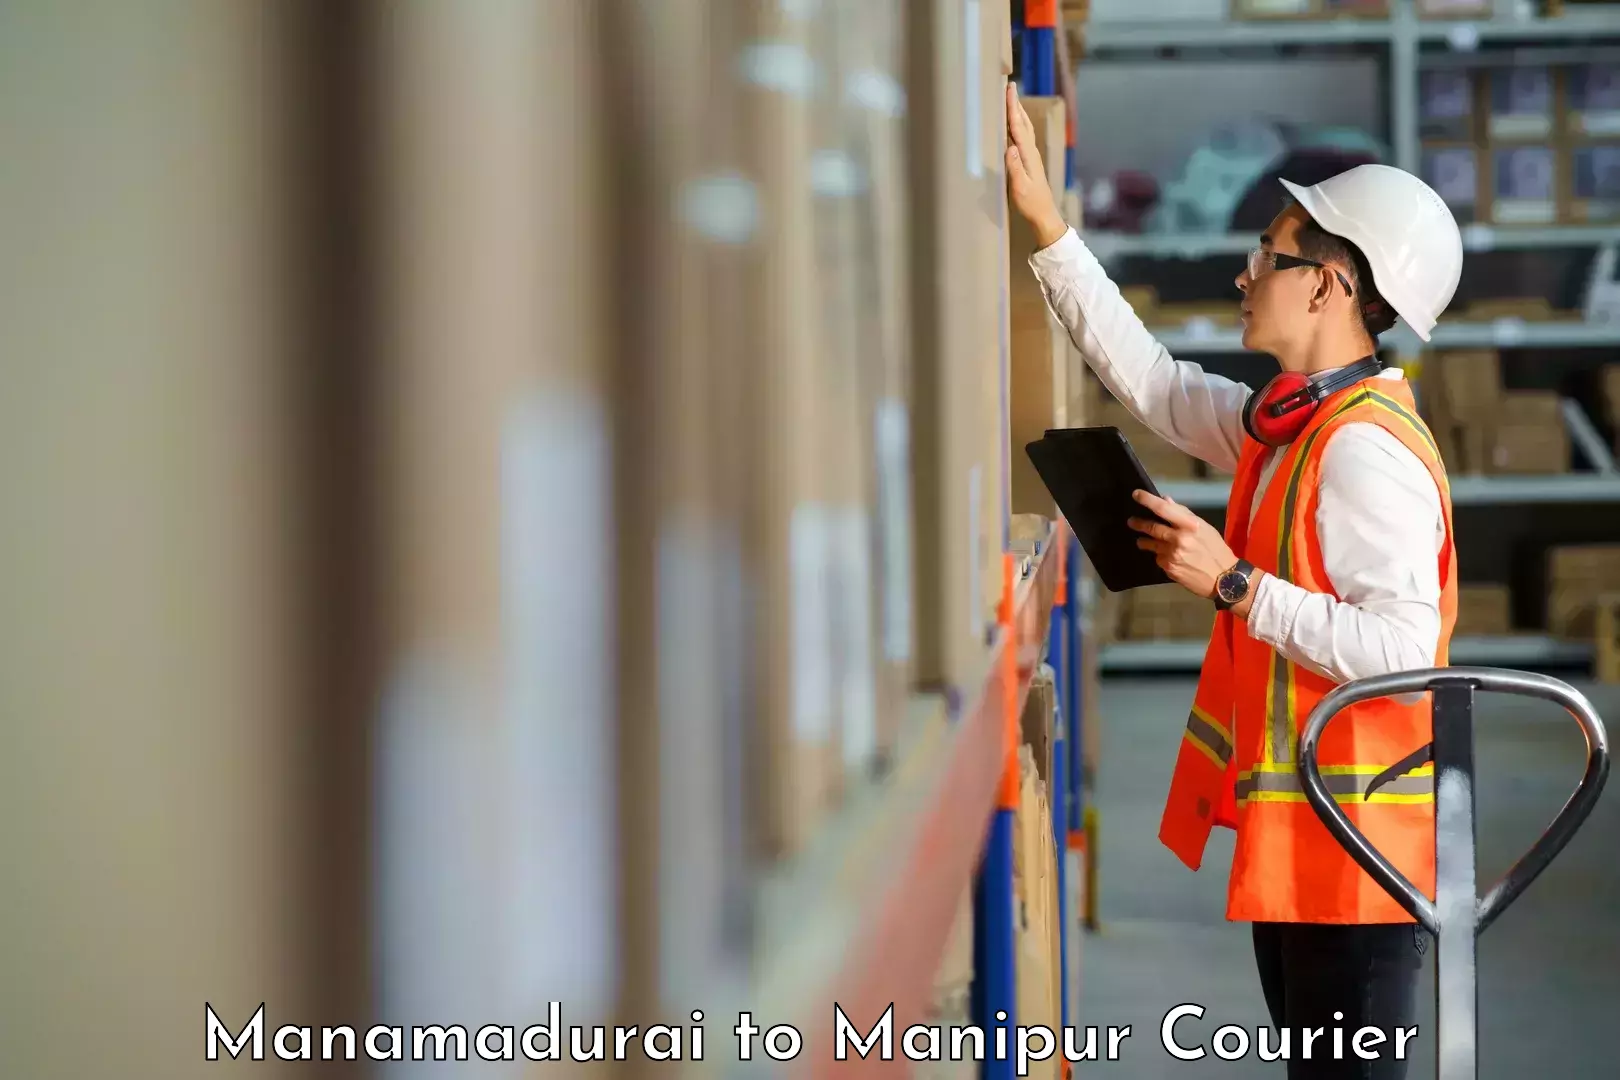 Enhanced tracking features Manamadurai to Manipur